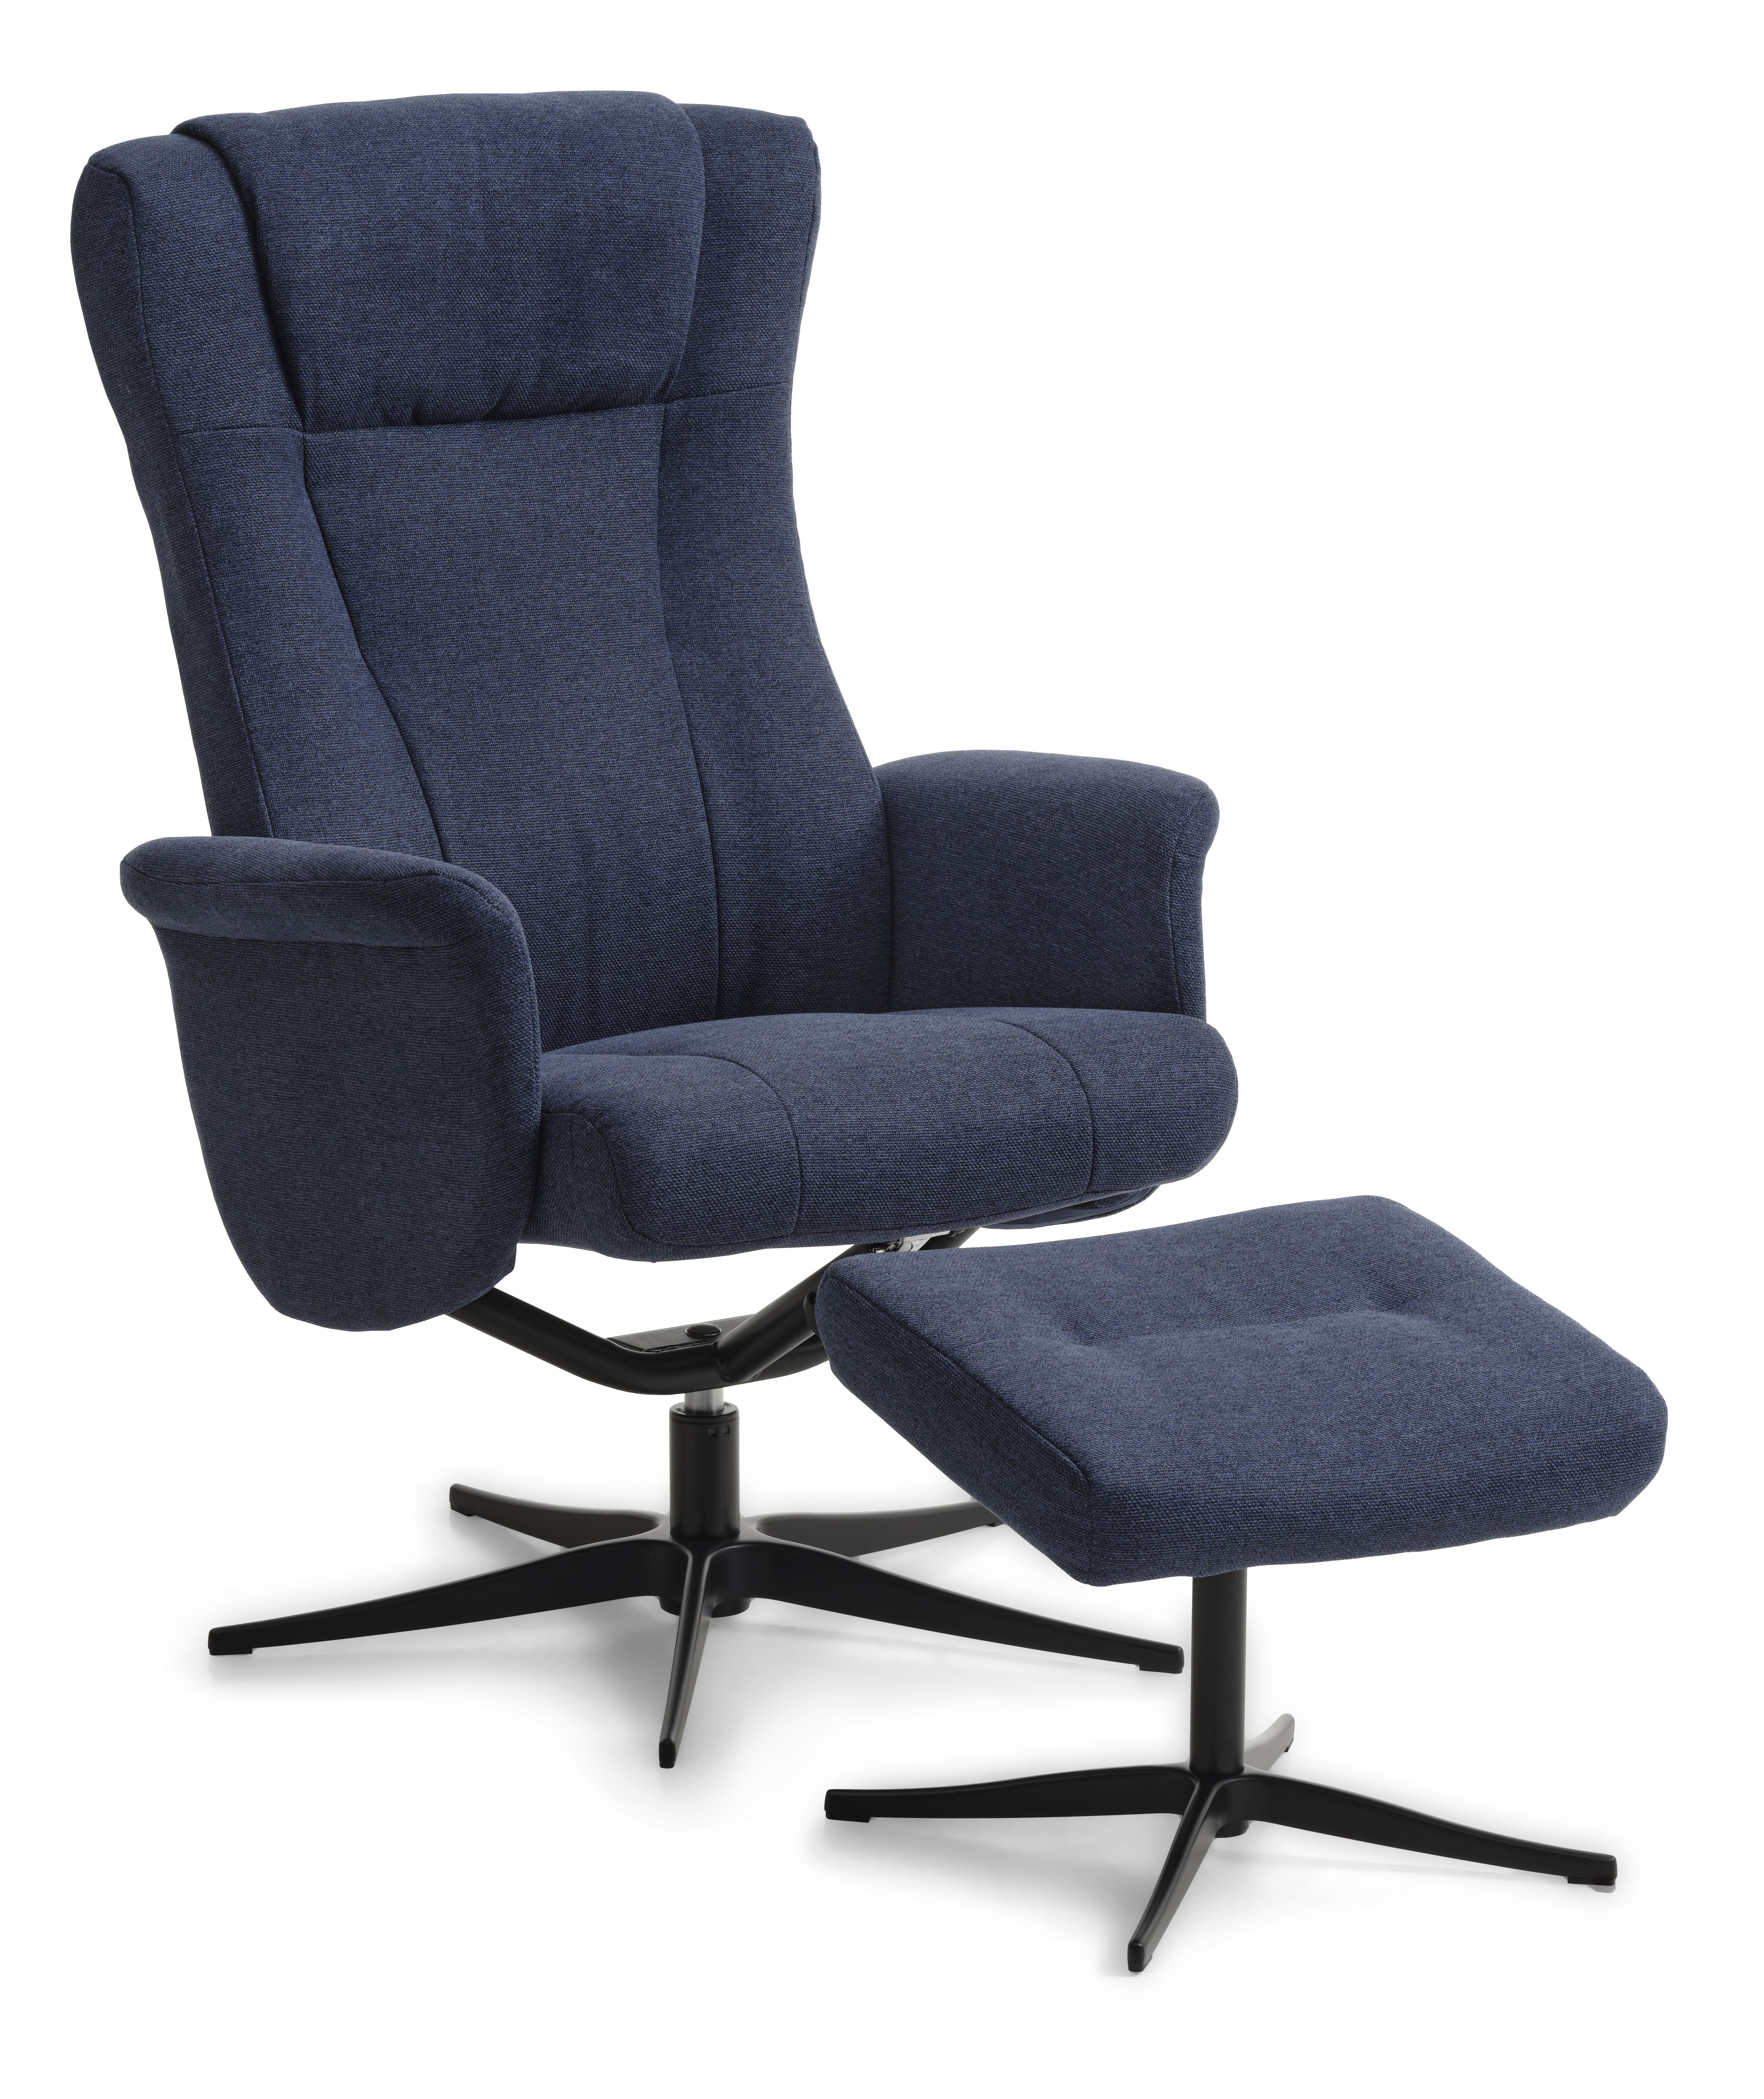 Liam recliner lænestol, inkl. fodskammel - blå polyester stof og sort aluminium